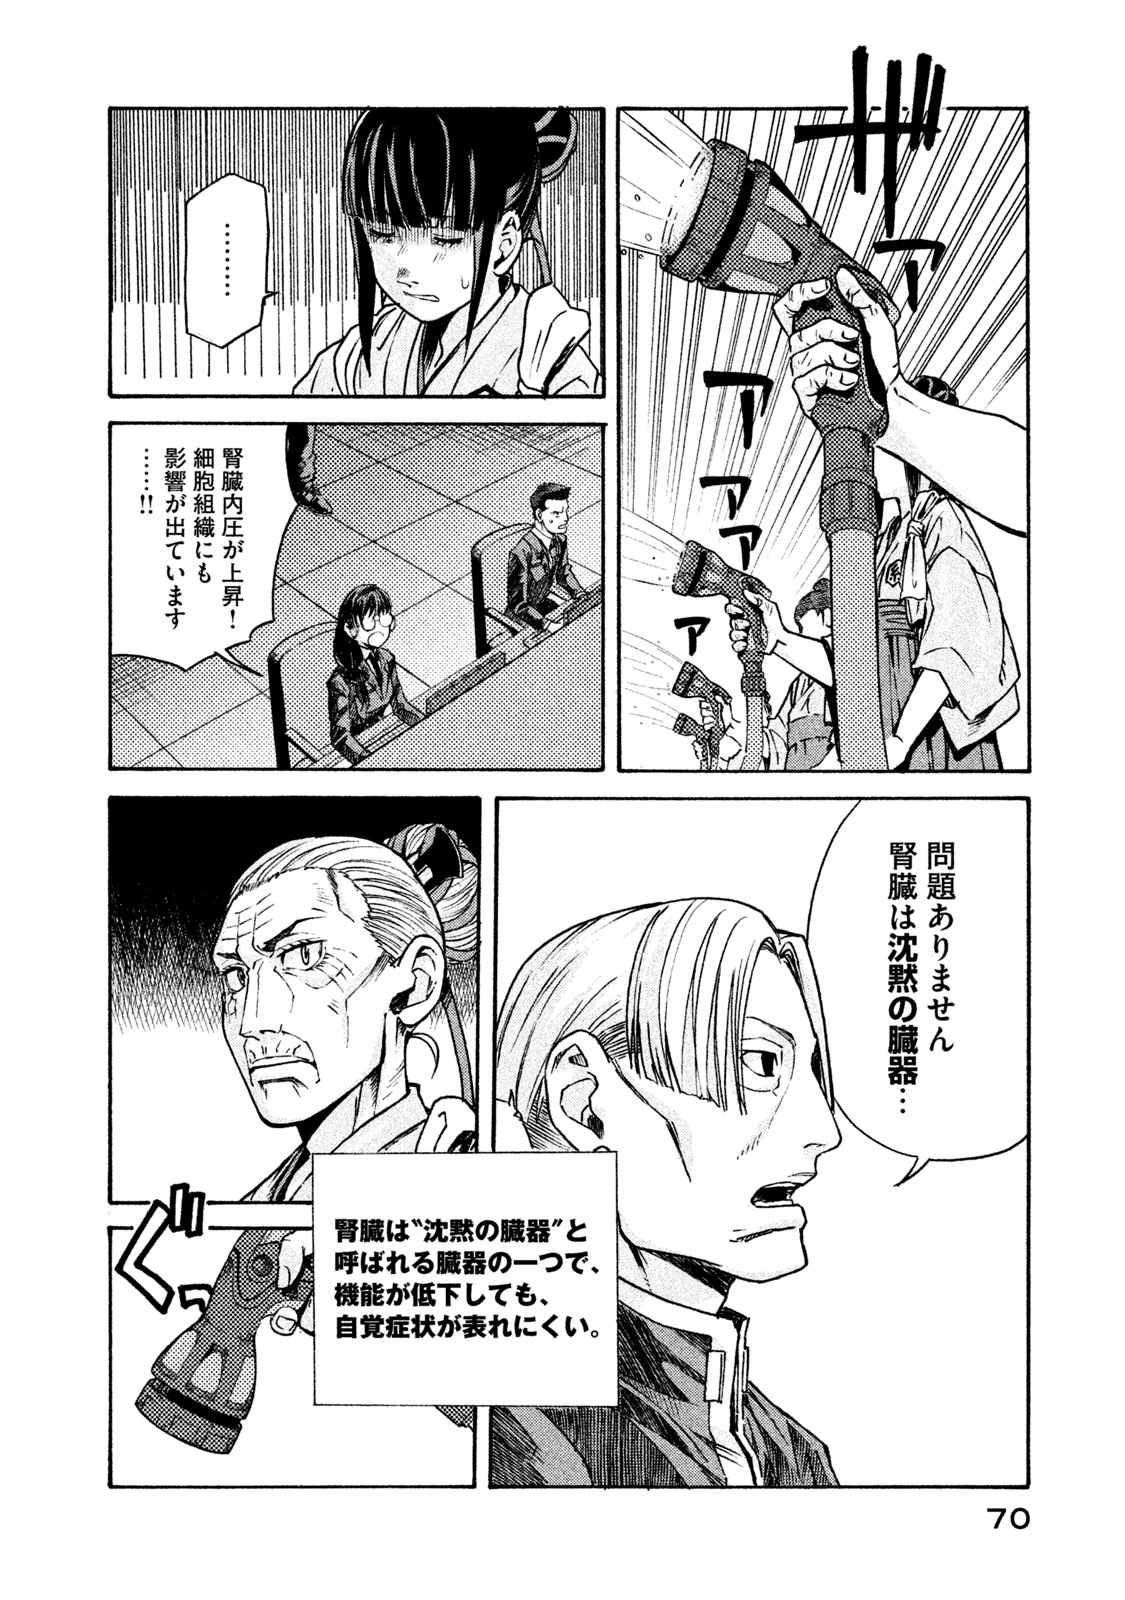 Hataraku Saibou BLACK - Chapter 13 - Page 14